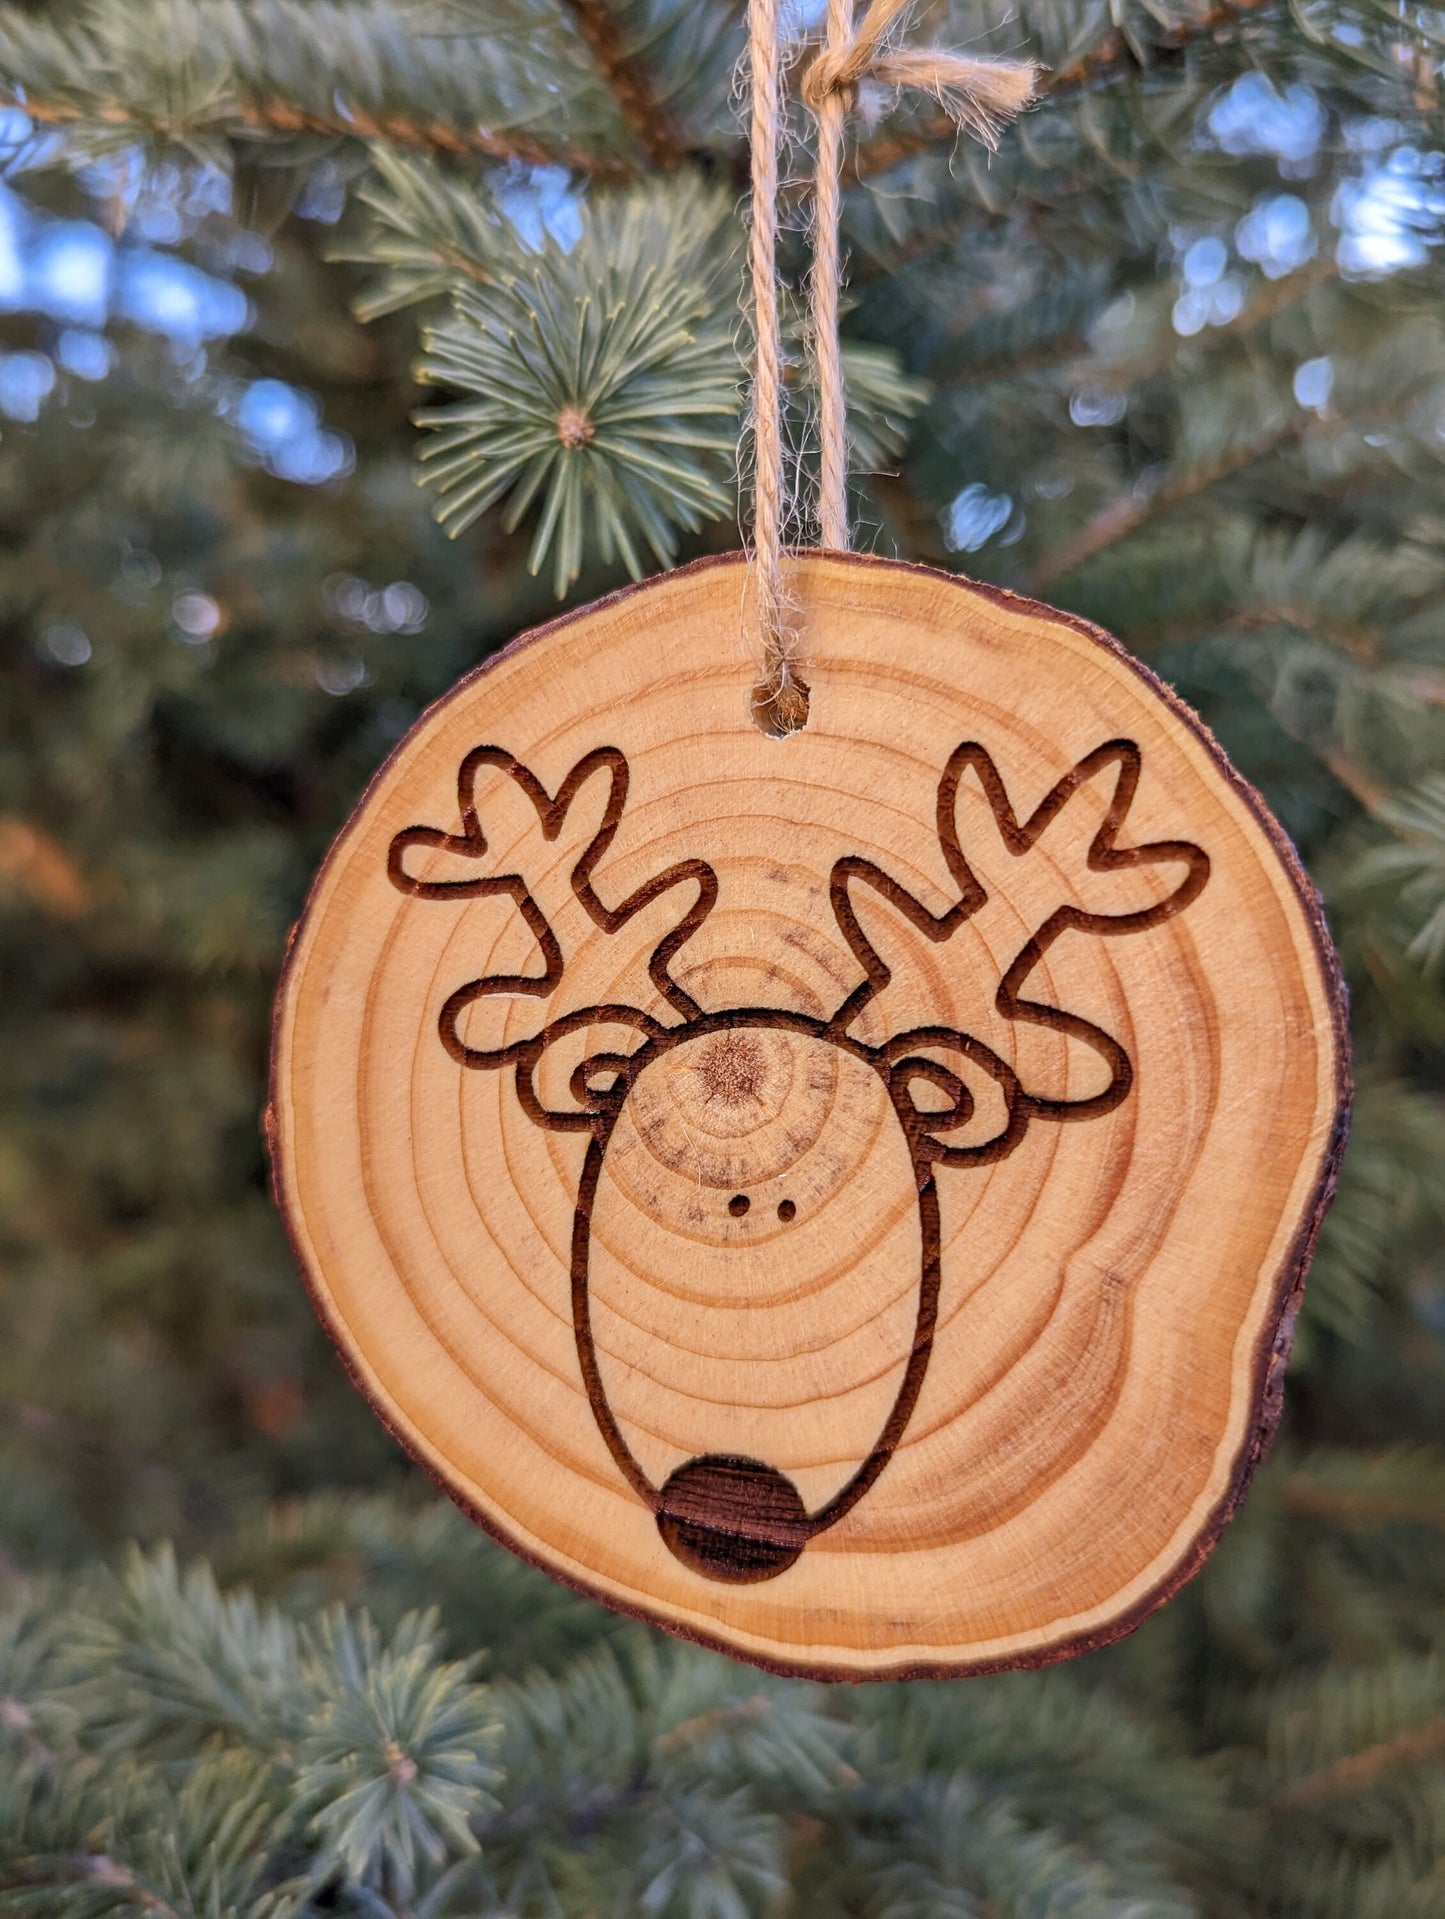 Custom engraved Pine wood Christmas ornaments